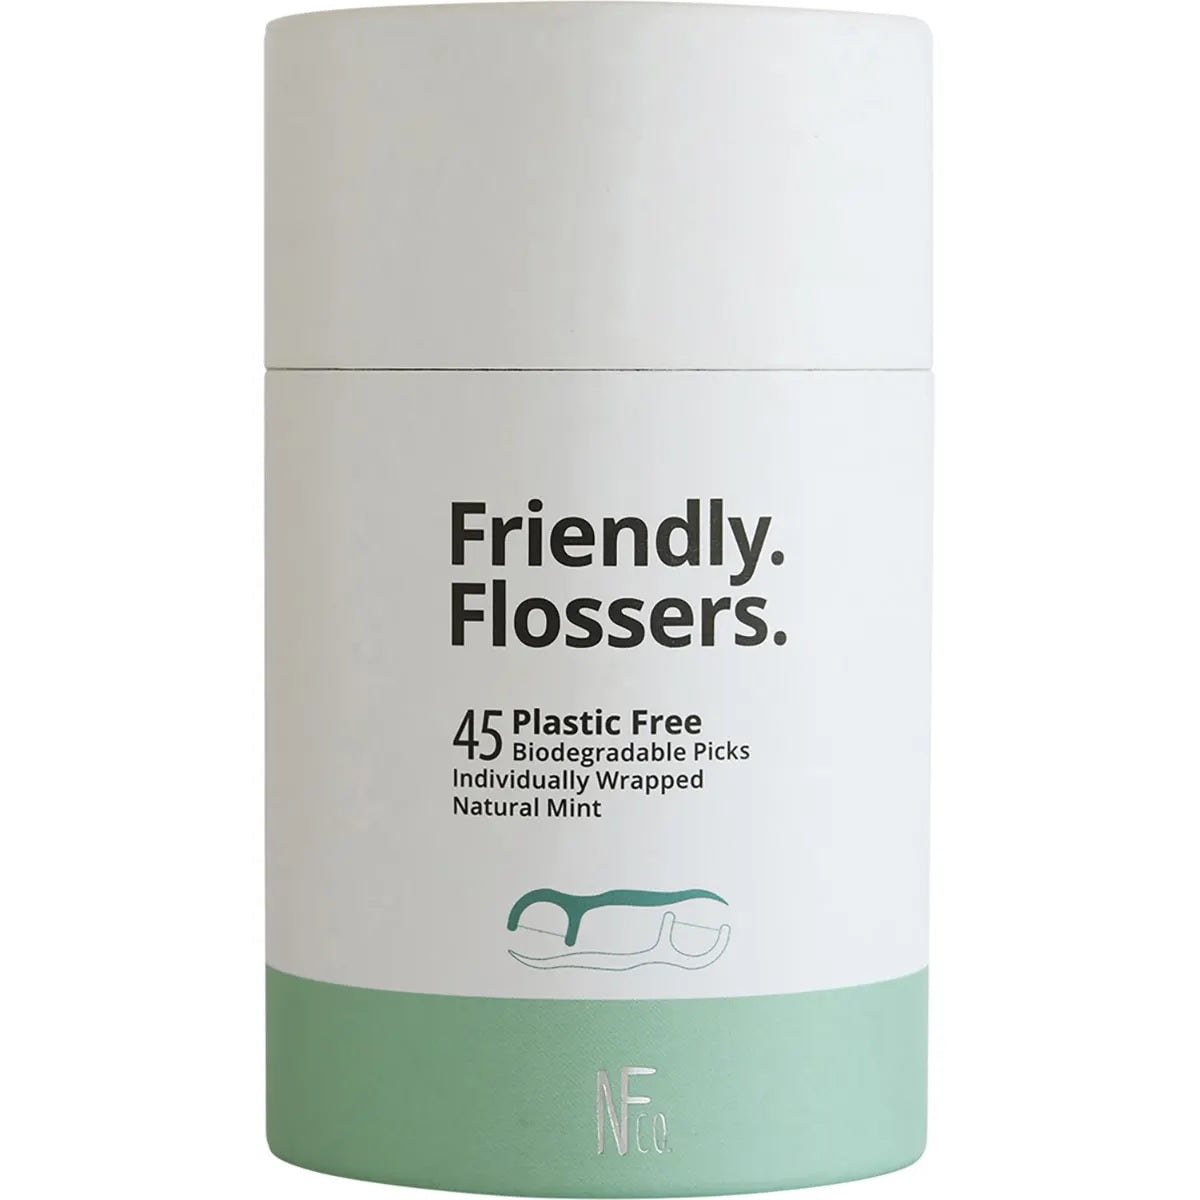 friendly-flossers-plastic-free-brisbane